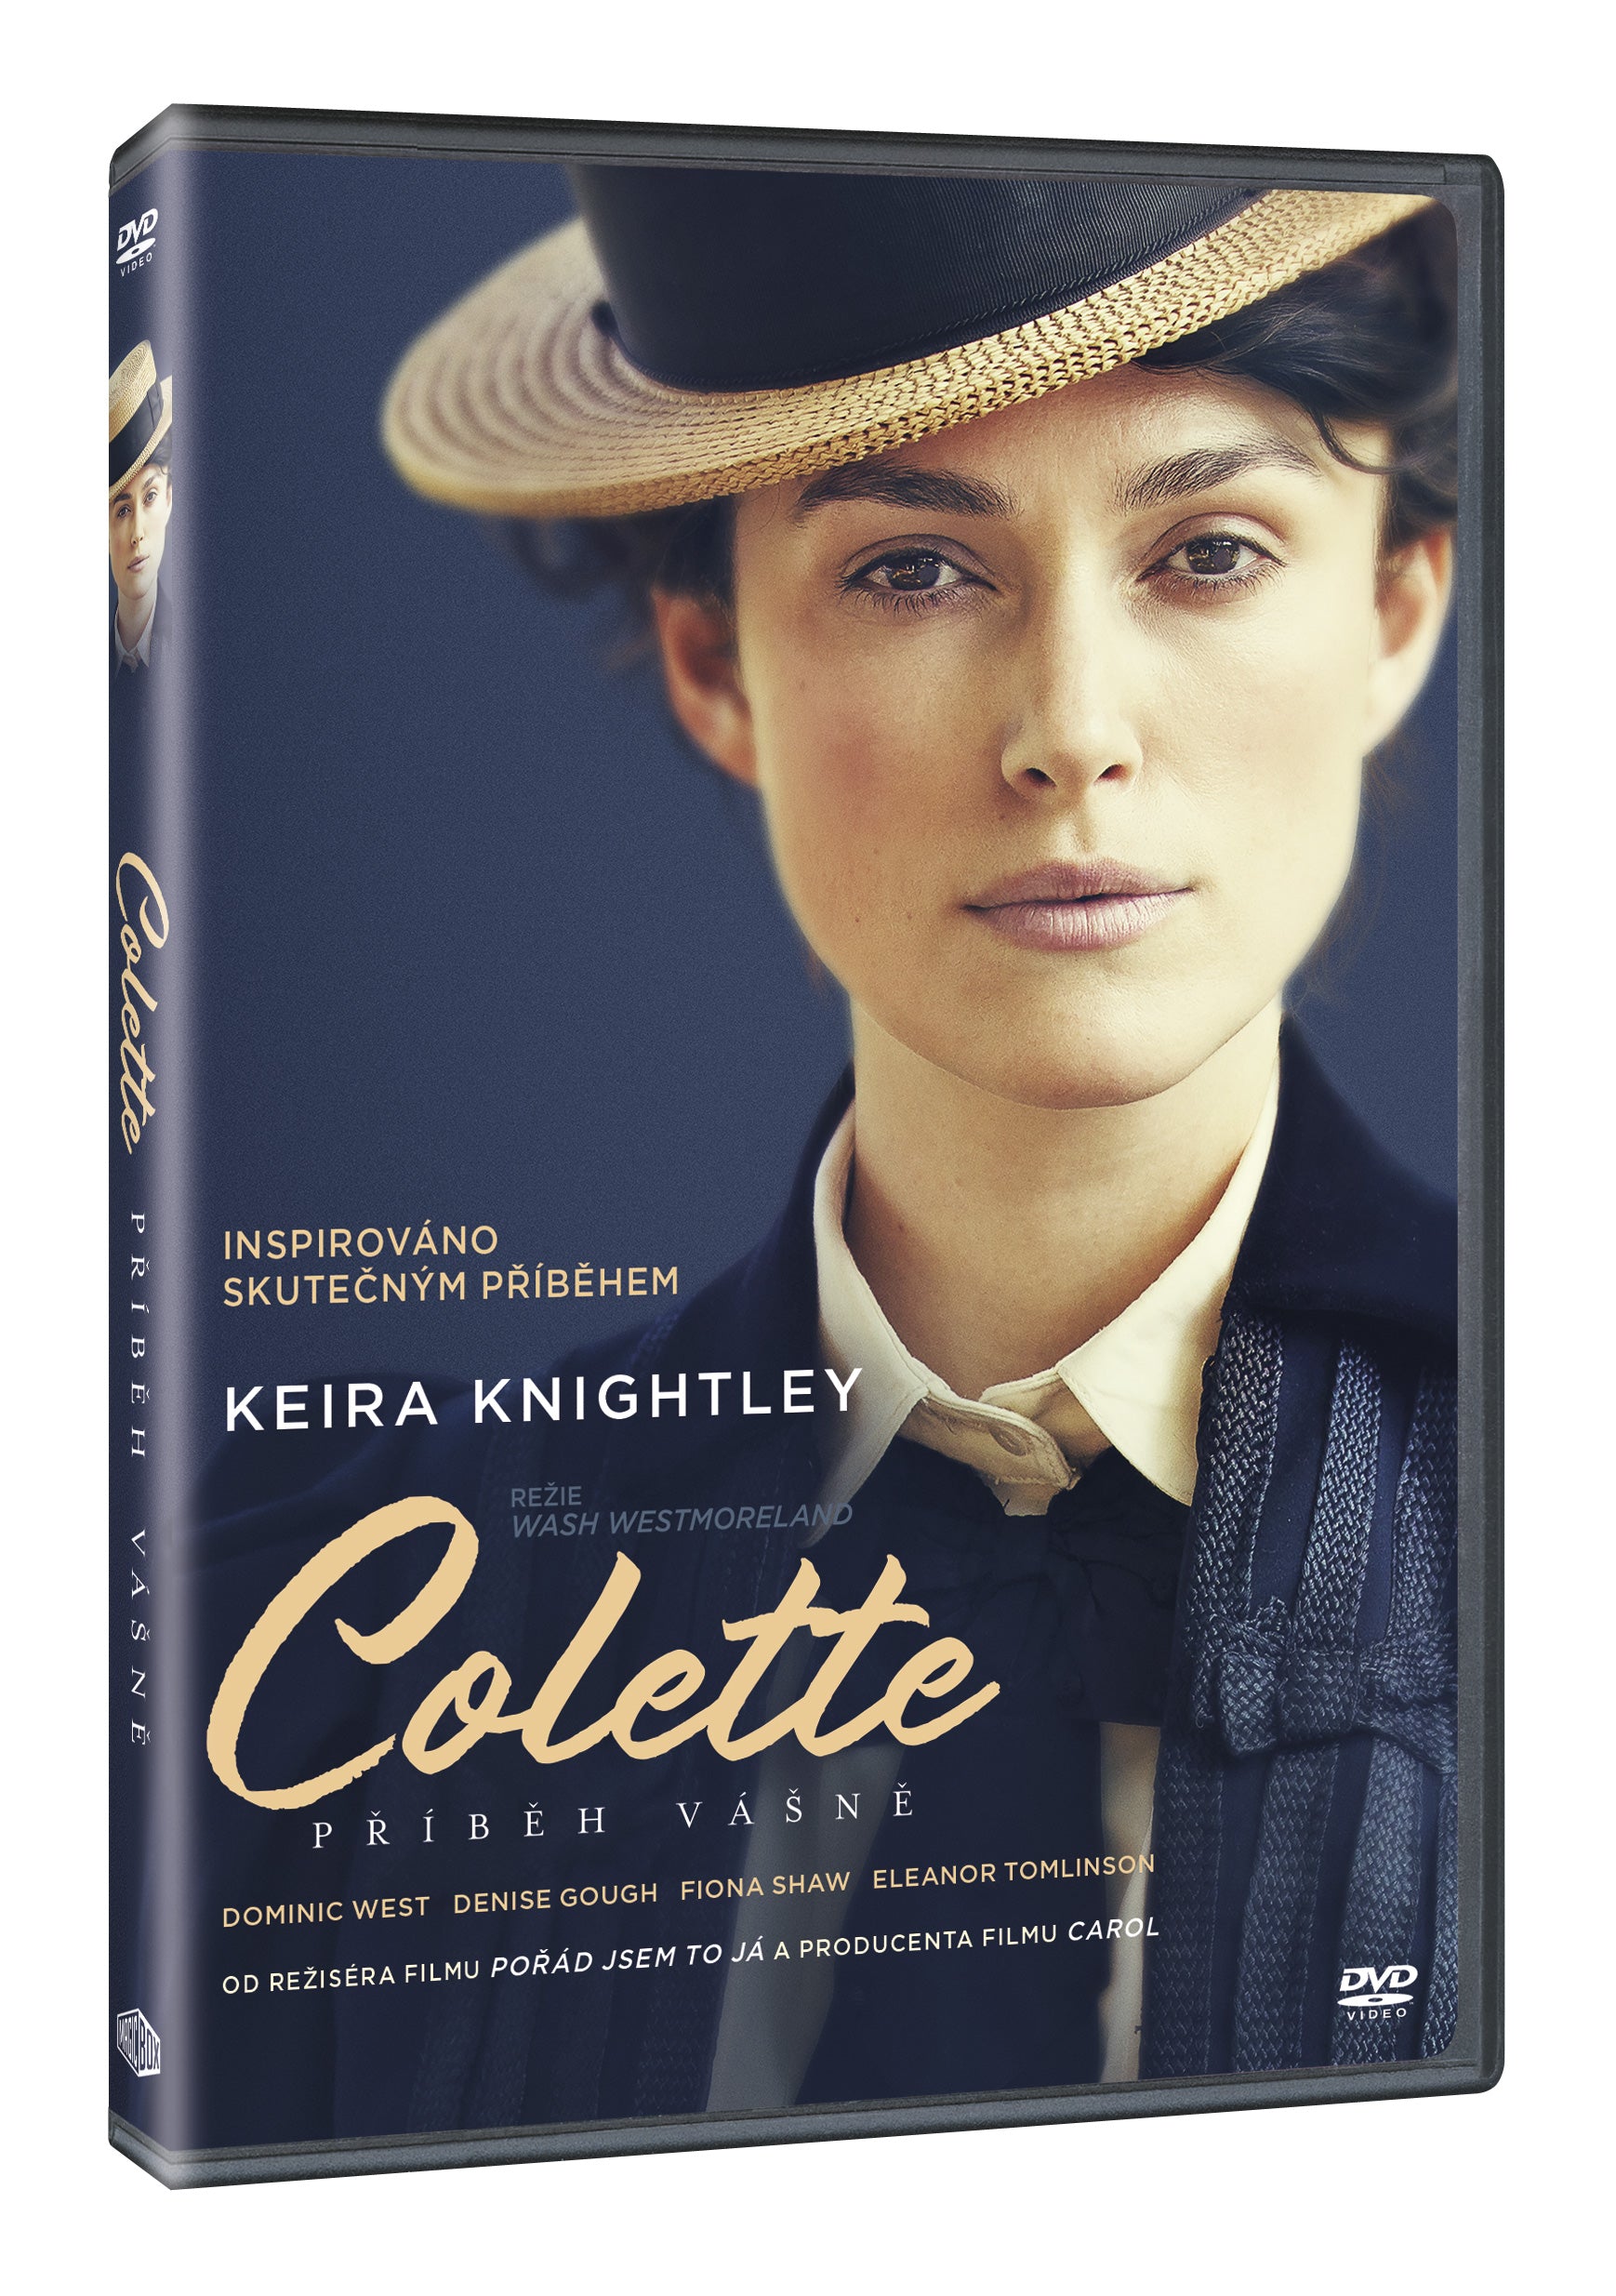 Colette: Pribeh vasne DVD / Colette